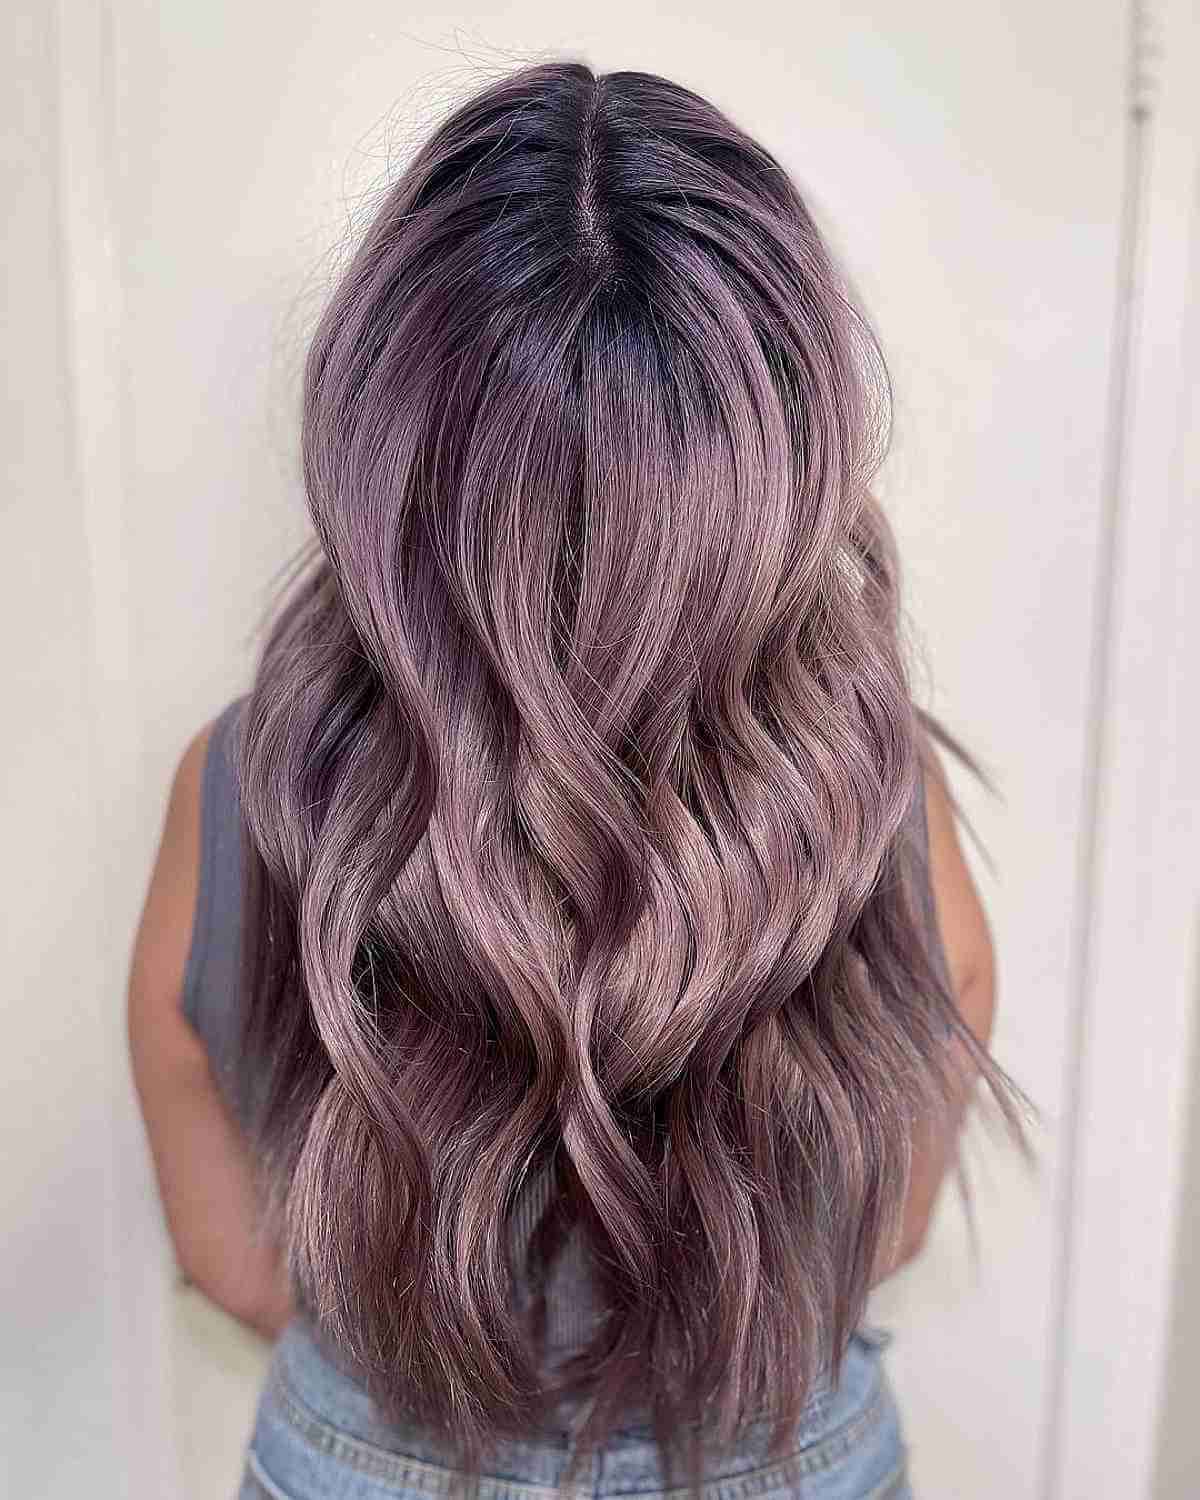 Dusty Lavender Hair for the Fall Season